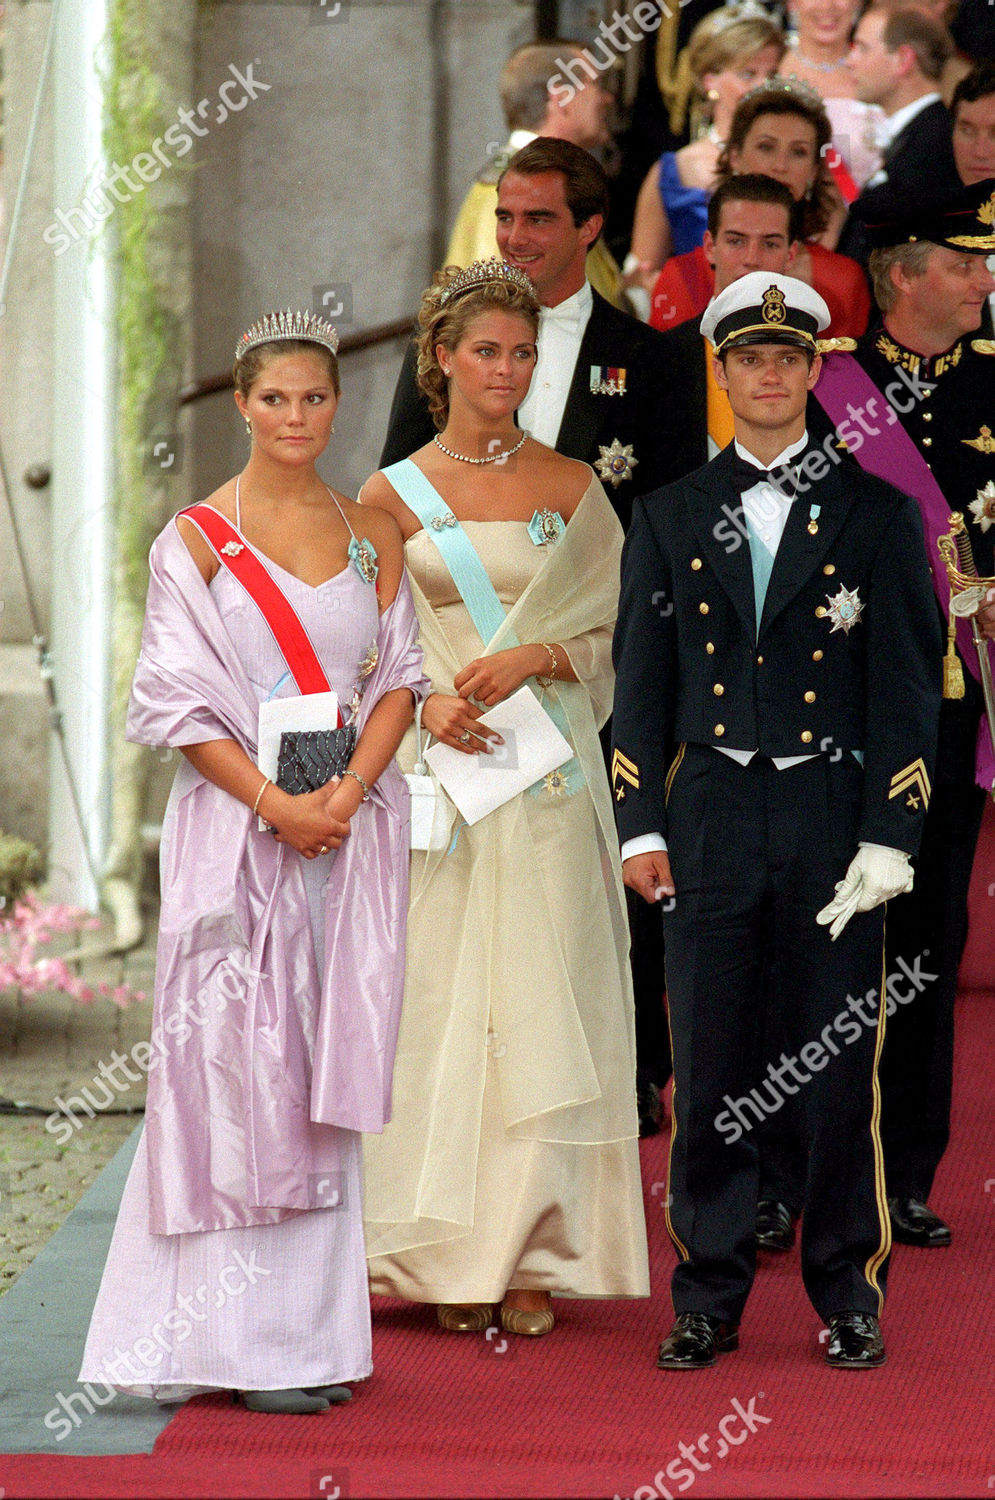 the-royal-wedding-of-crown-prince-haakon-magnus-and-mette-marit-tjessen-hoiby-in-oslo-norway-shutterstock-editorial-341606av.jpg